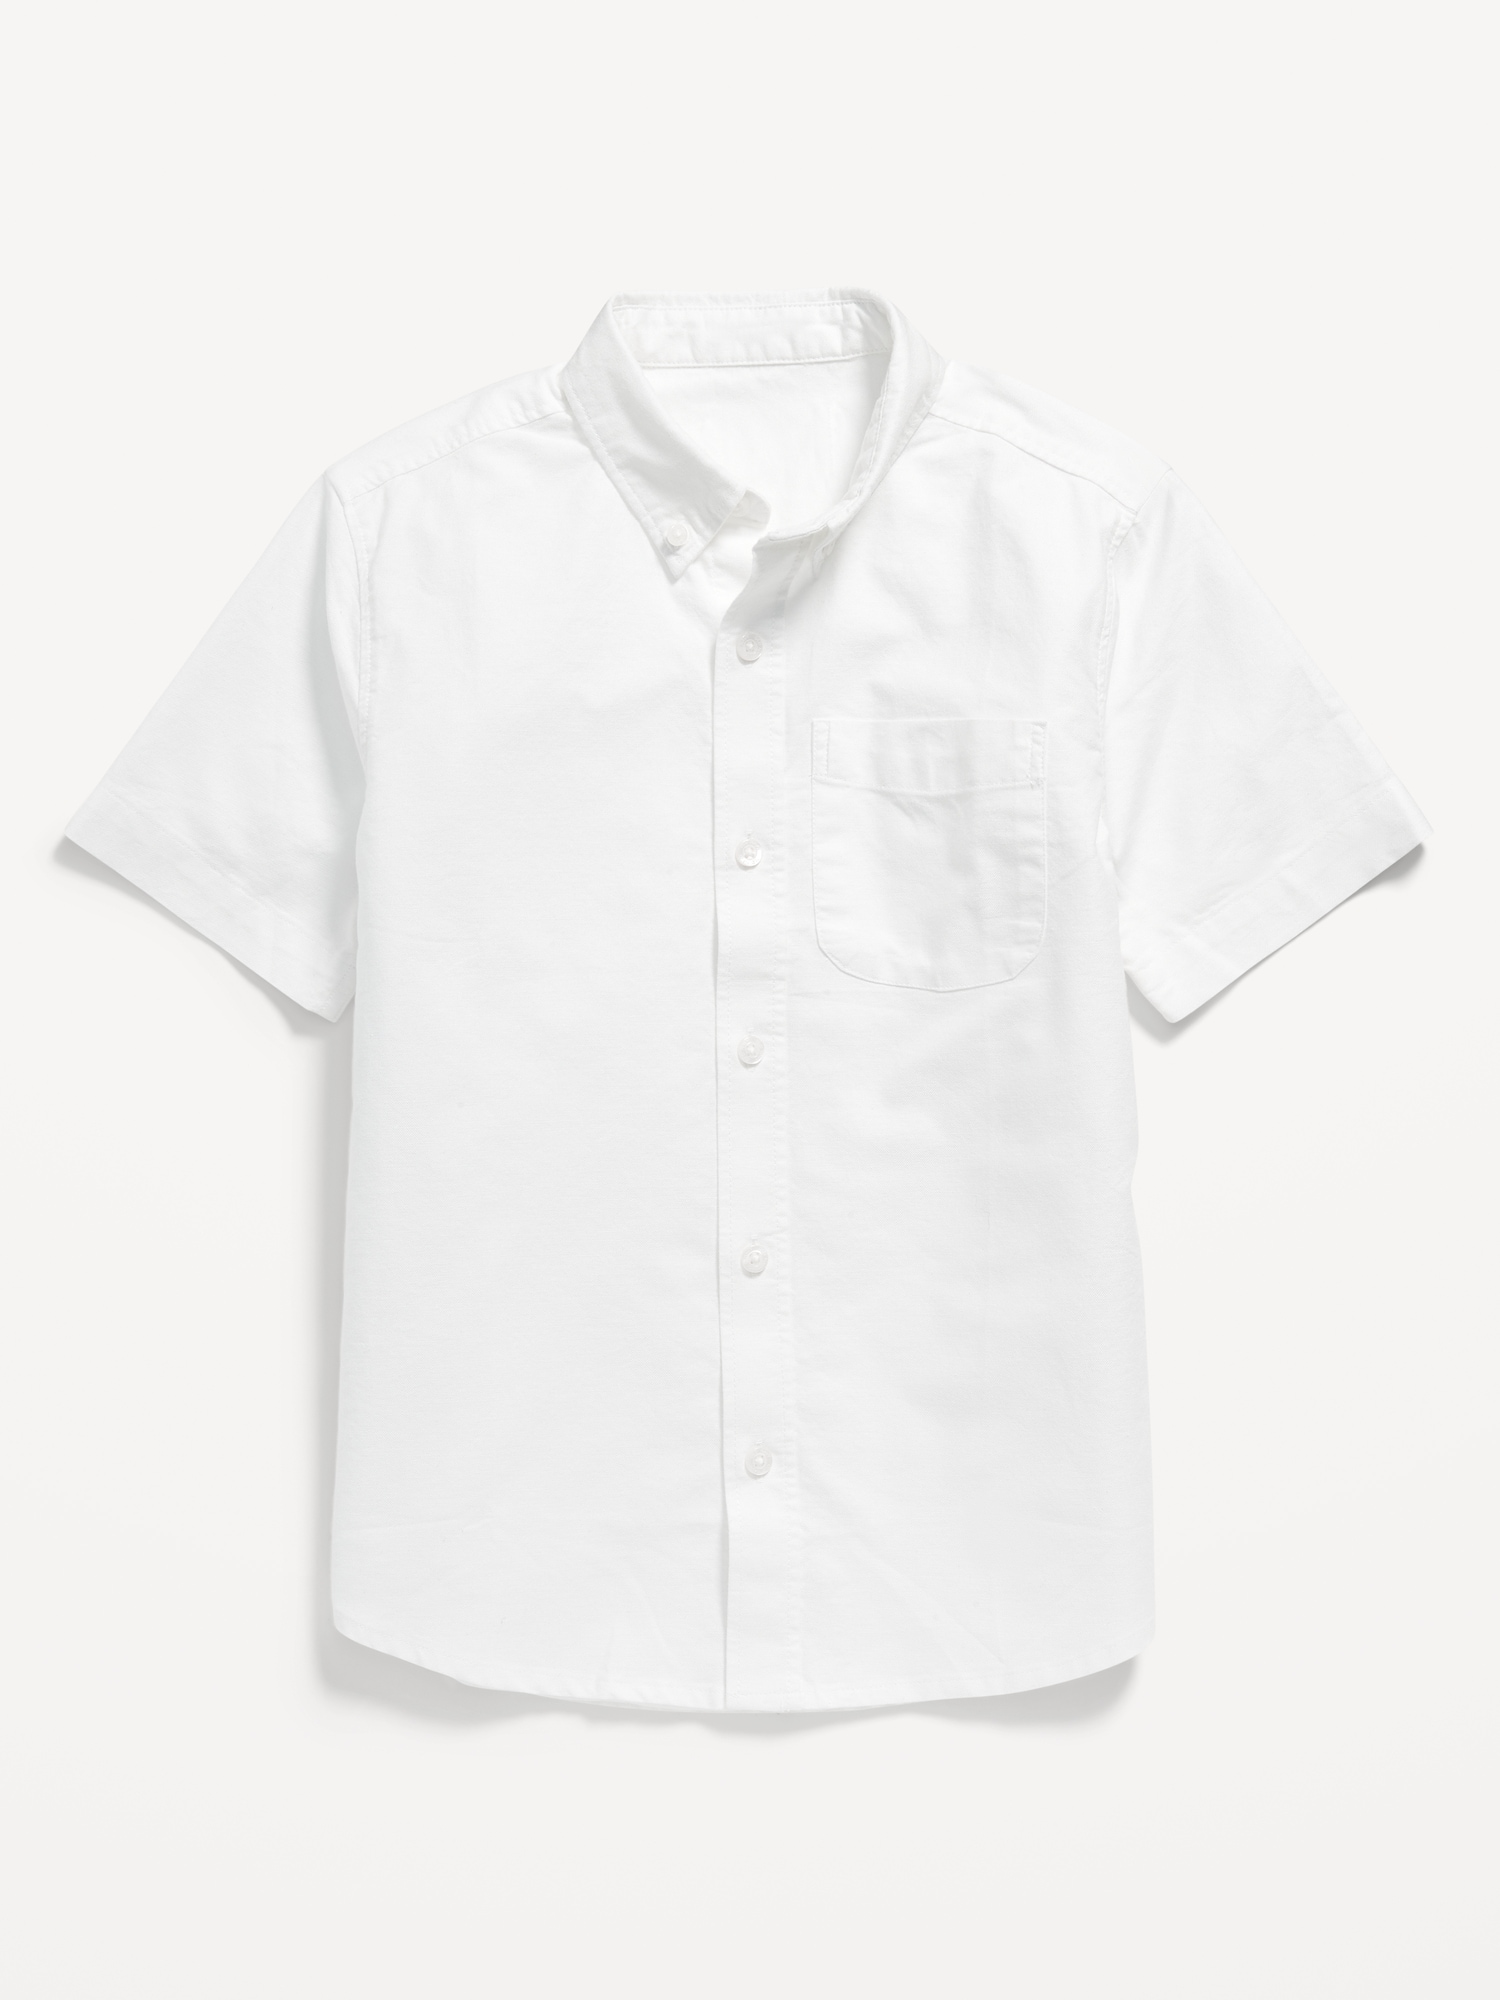 Short-Sleeve Oxford Shirt for Boys Hot Deal